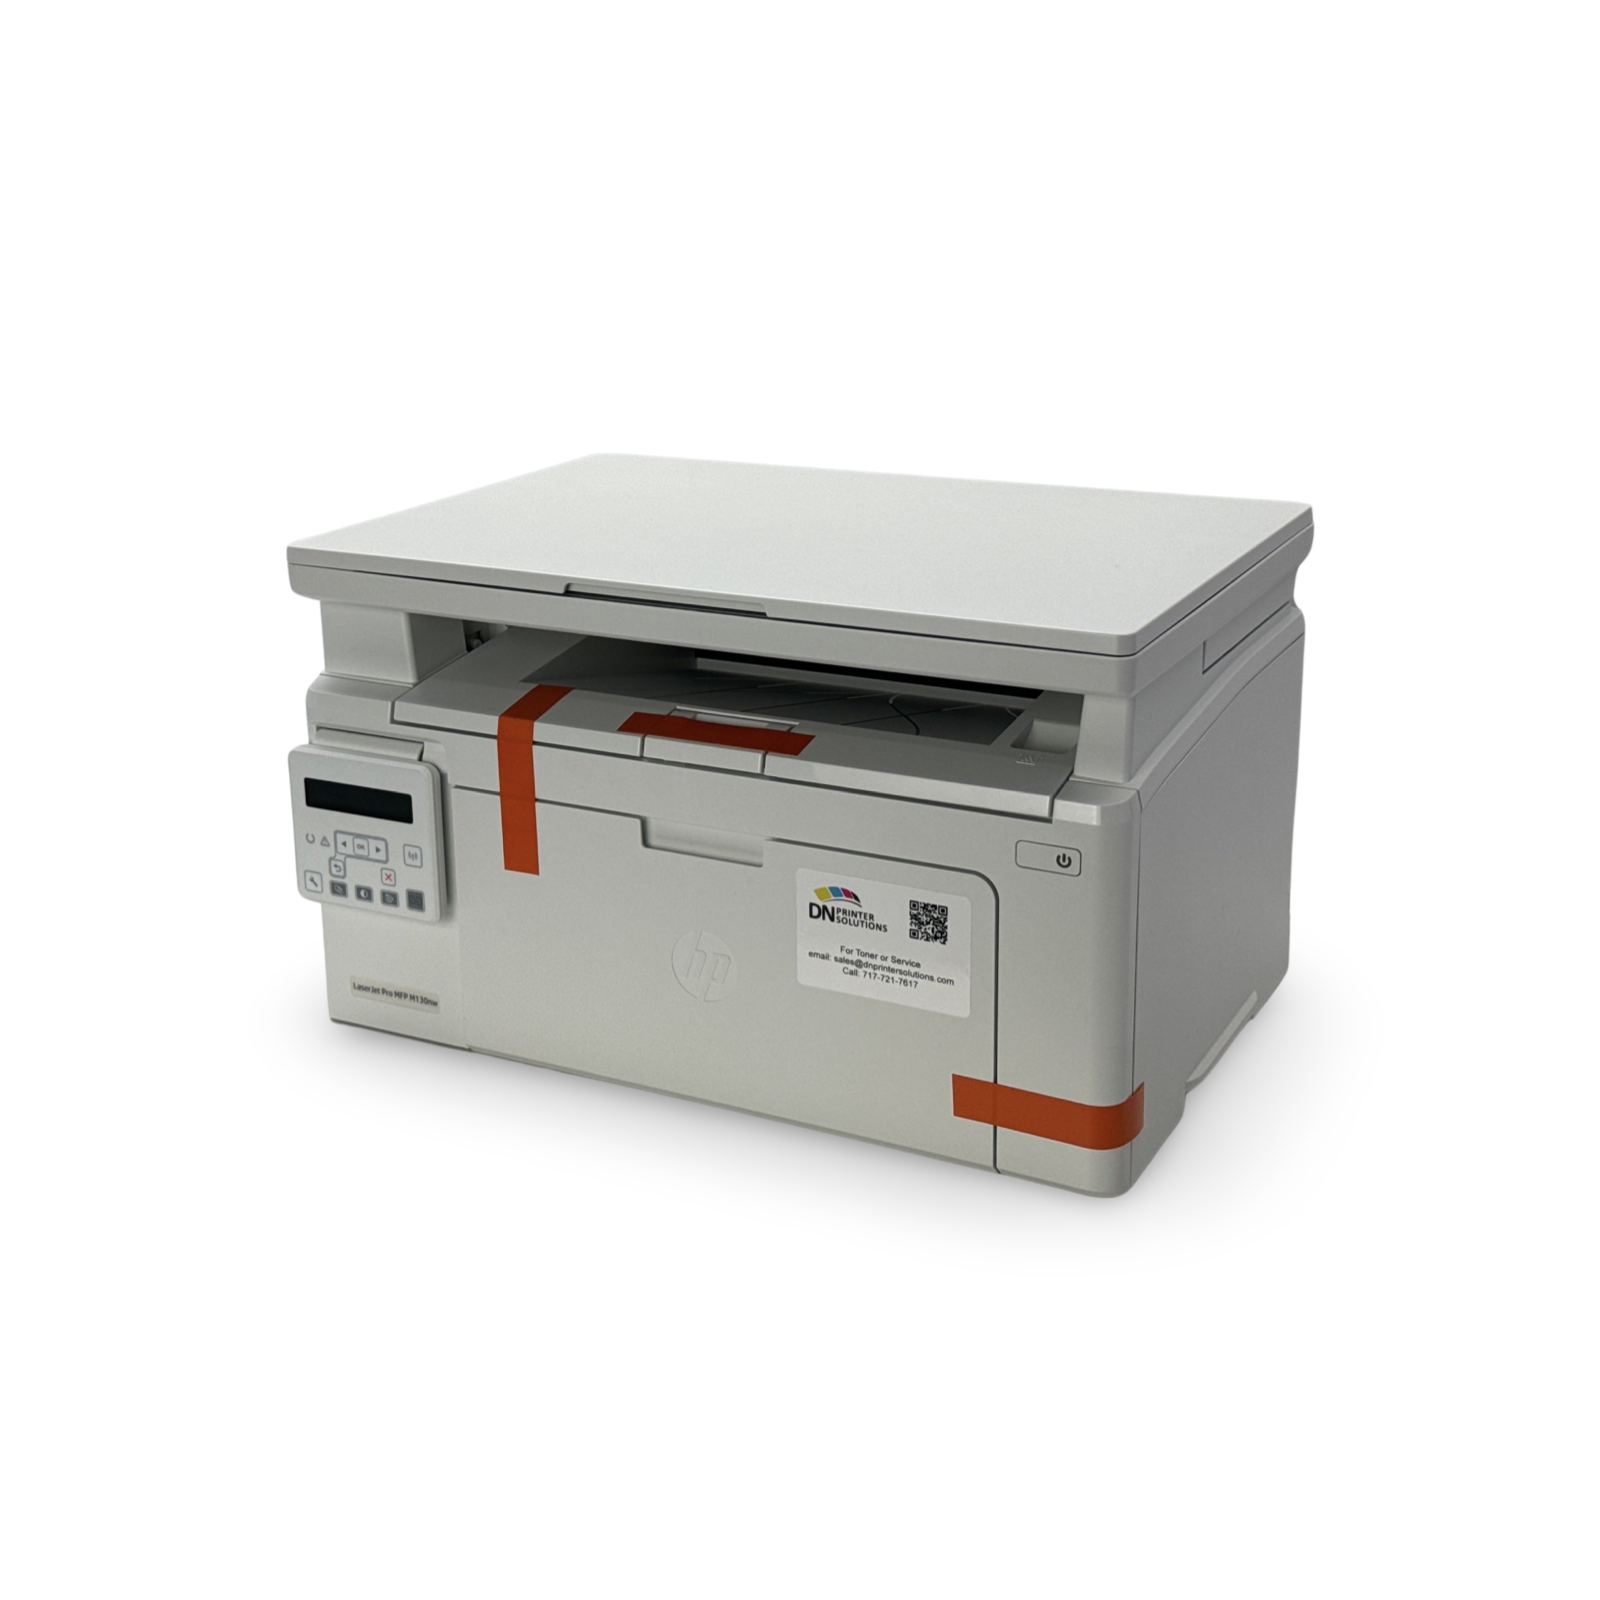 HP LaserJet Pro MFP M130nw Printer G3Q58A Refurbished